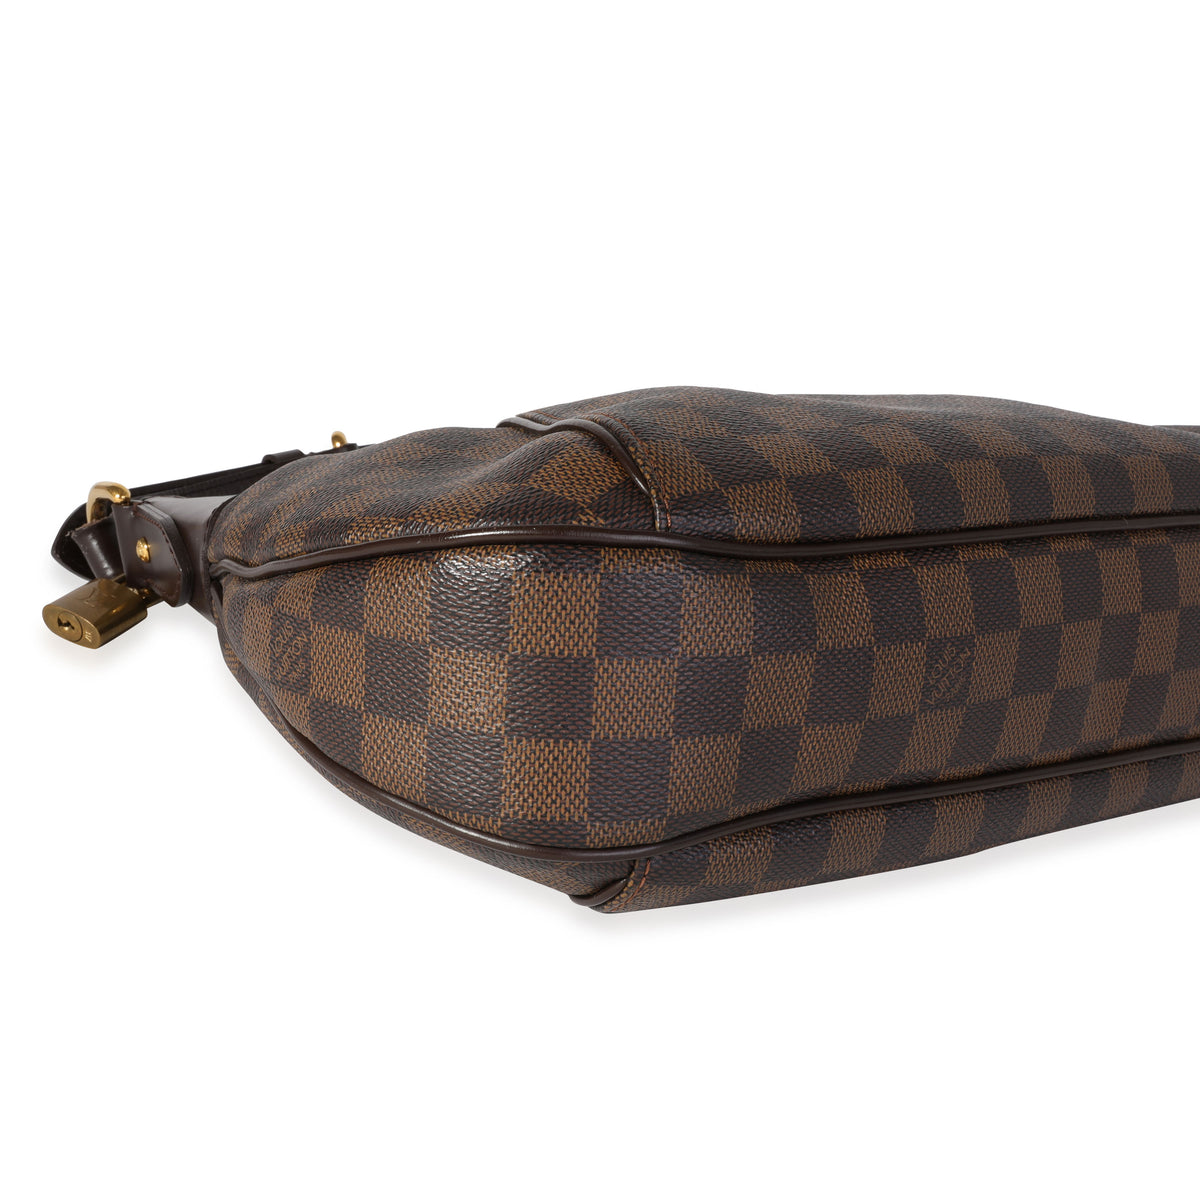 Pre-Owned Louis Vuitton Thames Damier Ebene GM Shoulder Bag - Very